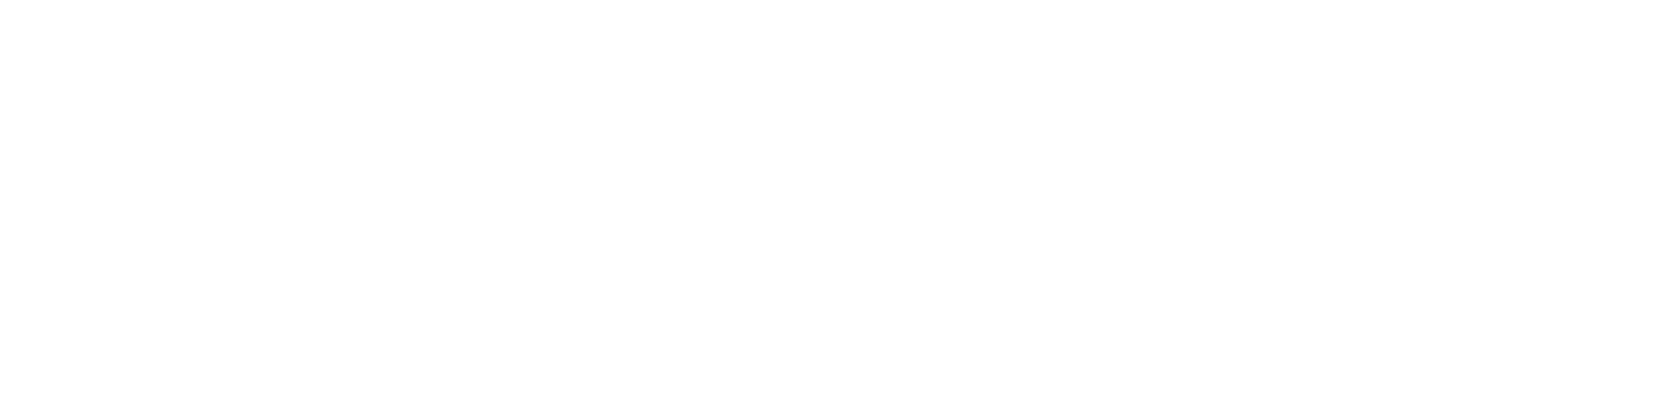 Ecotessili